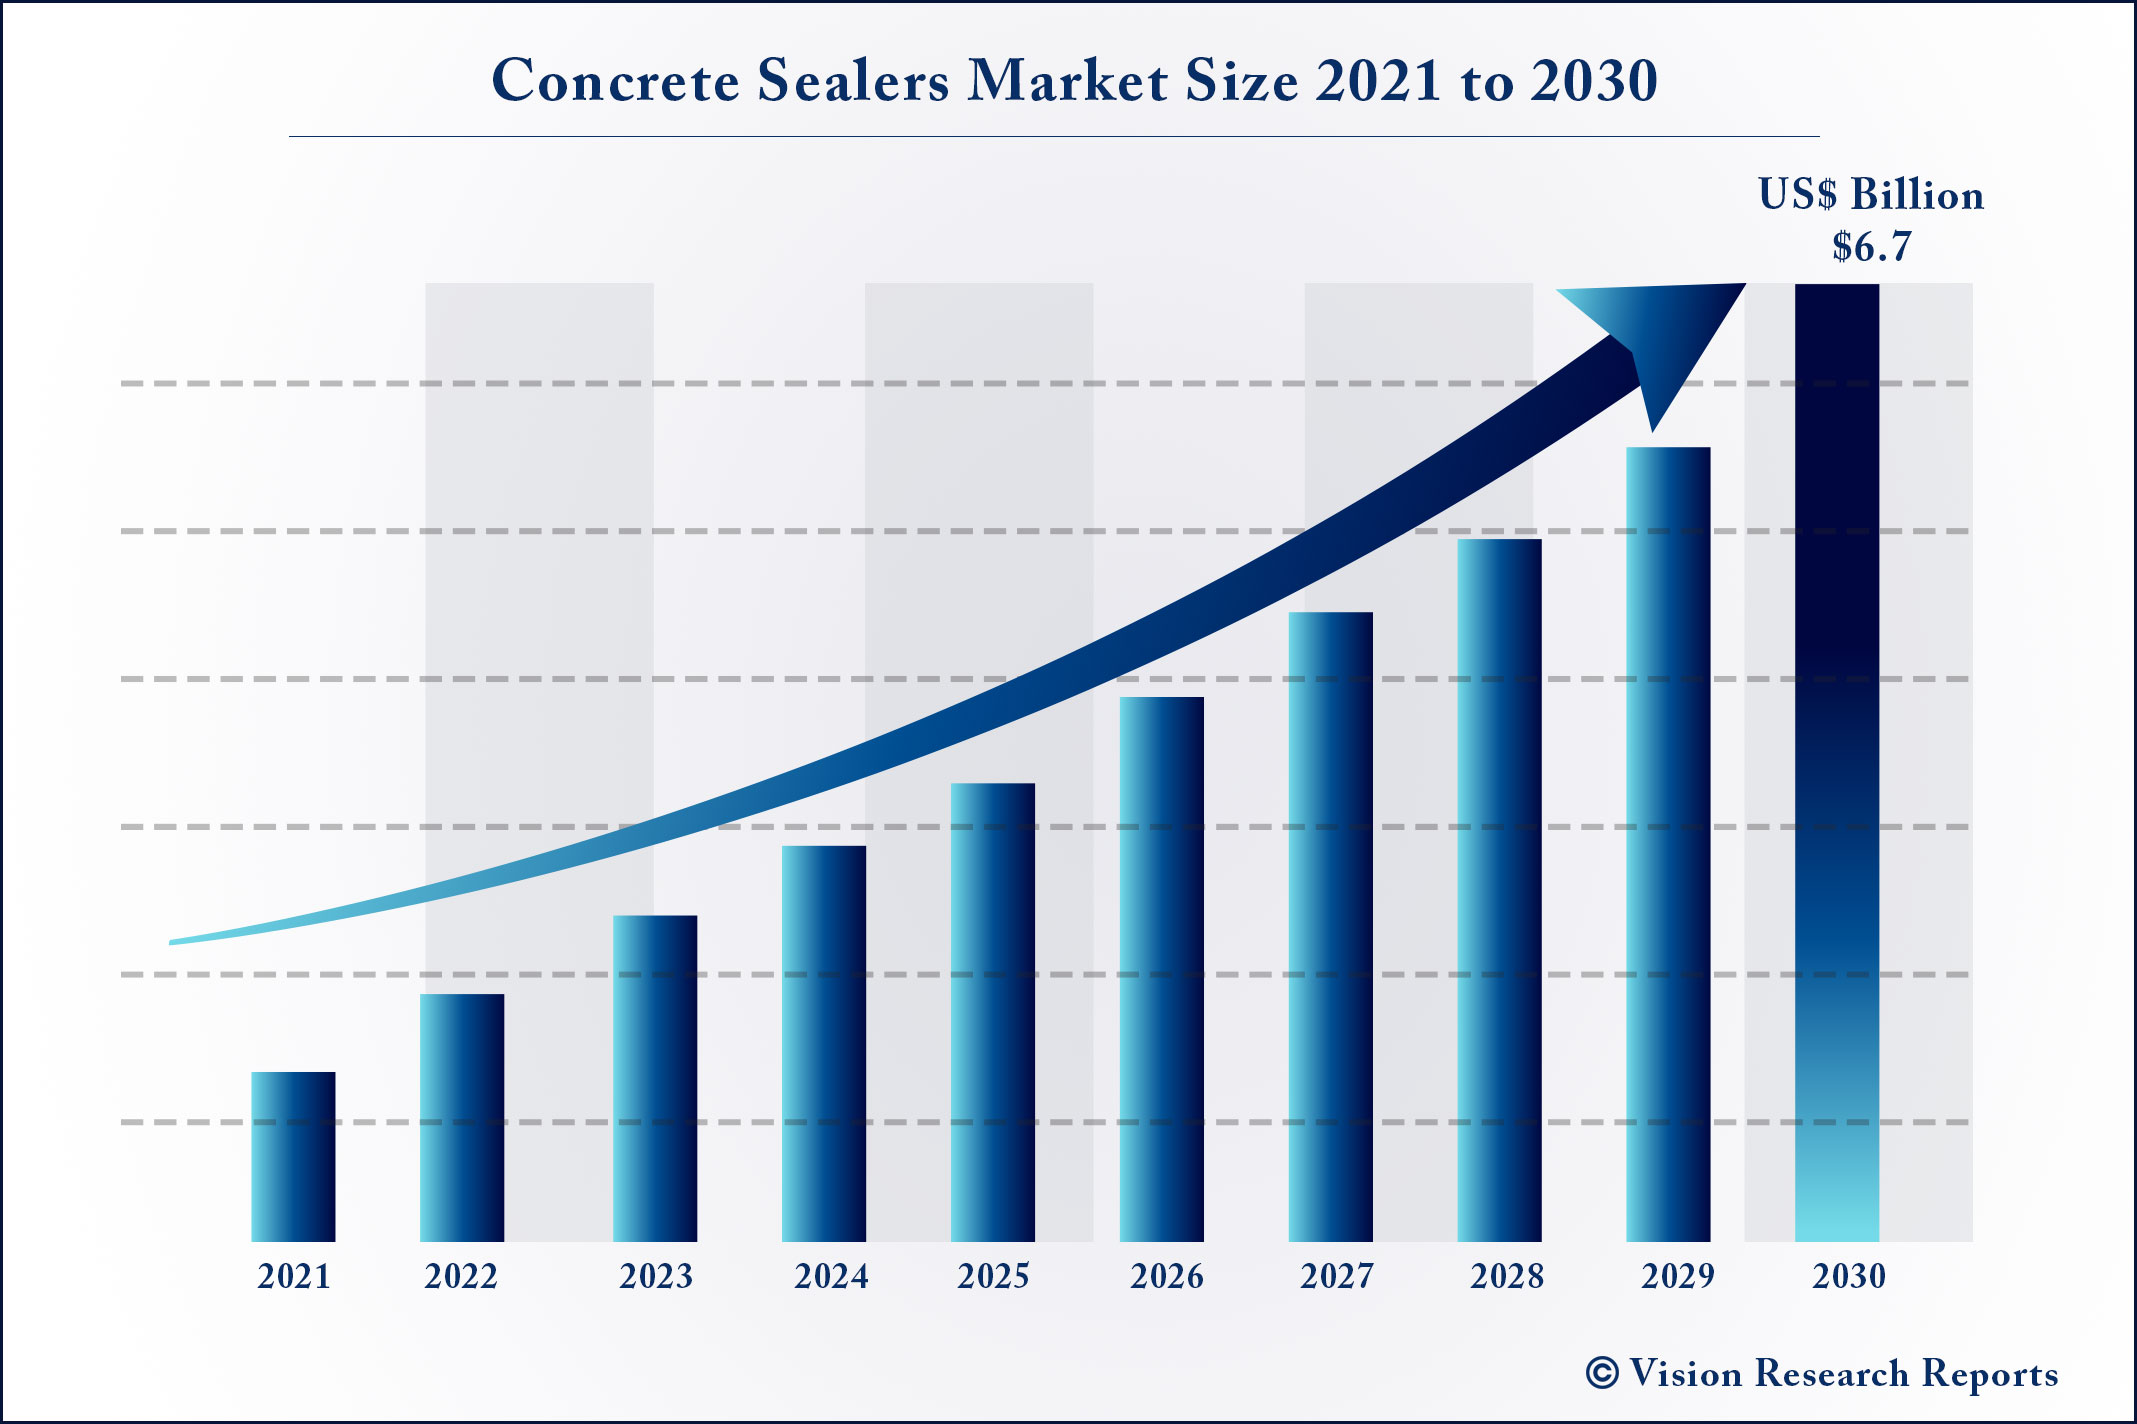 Concrete Sealers Market Size 2021 to 2030